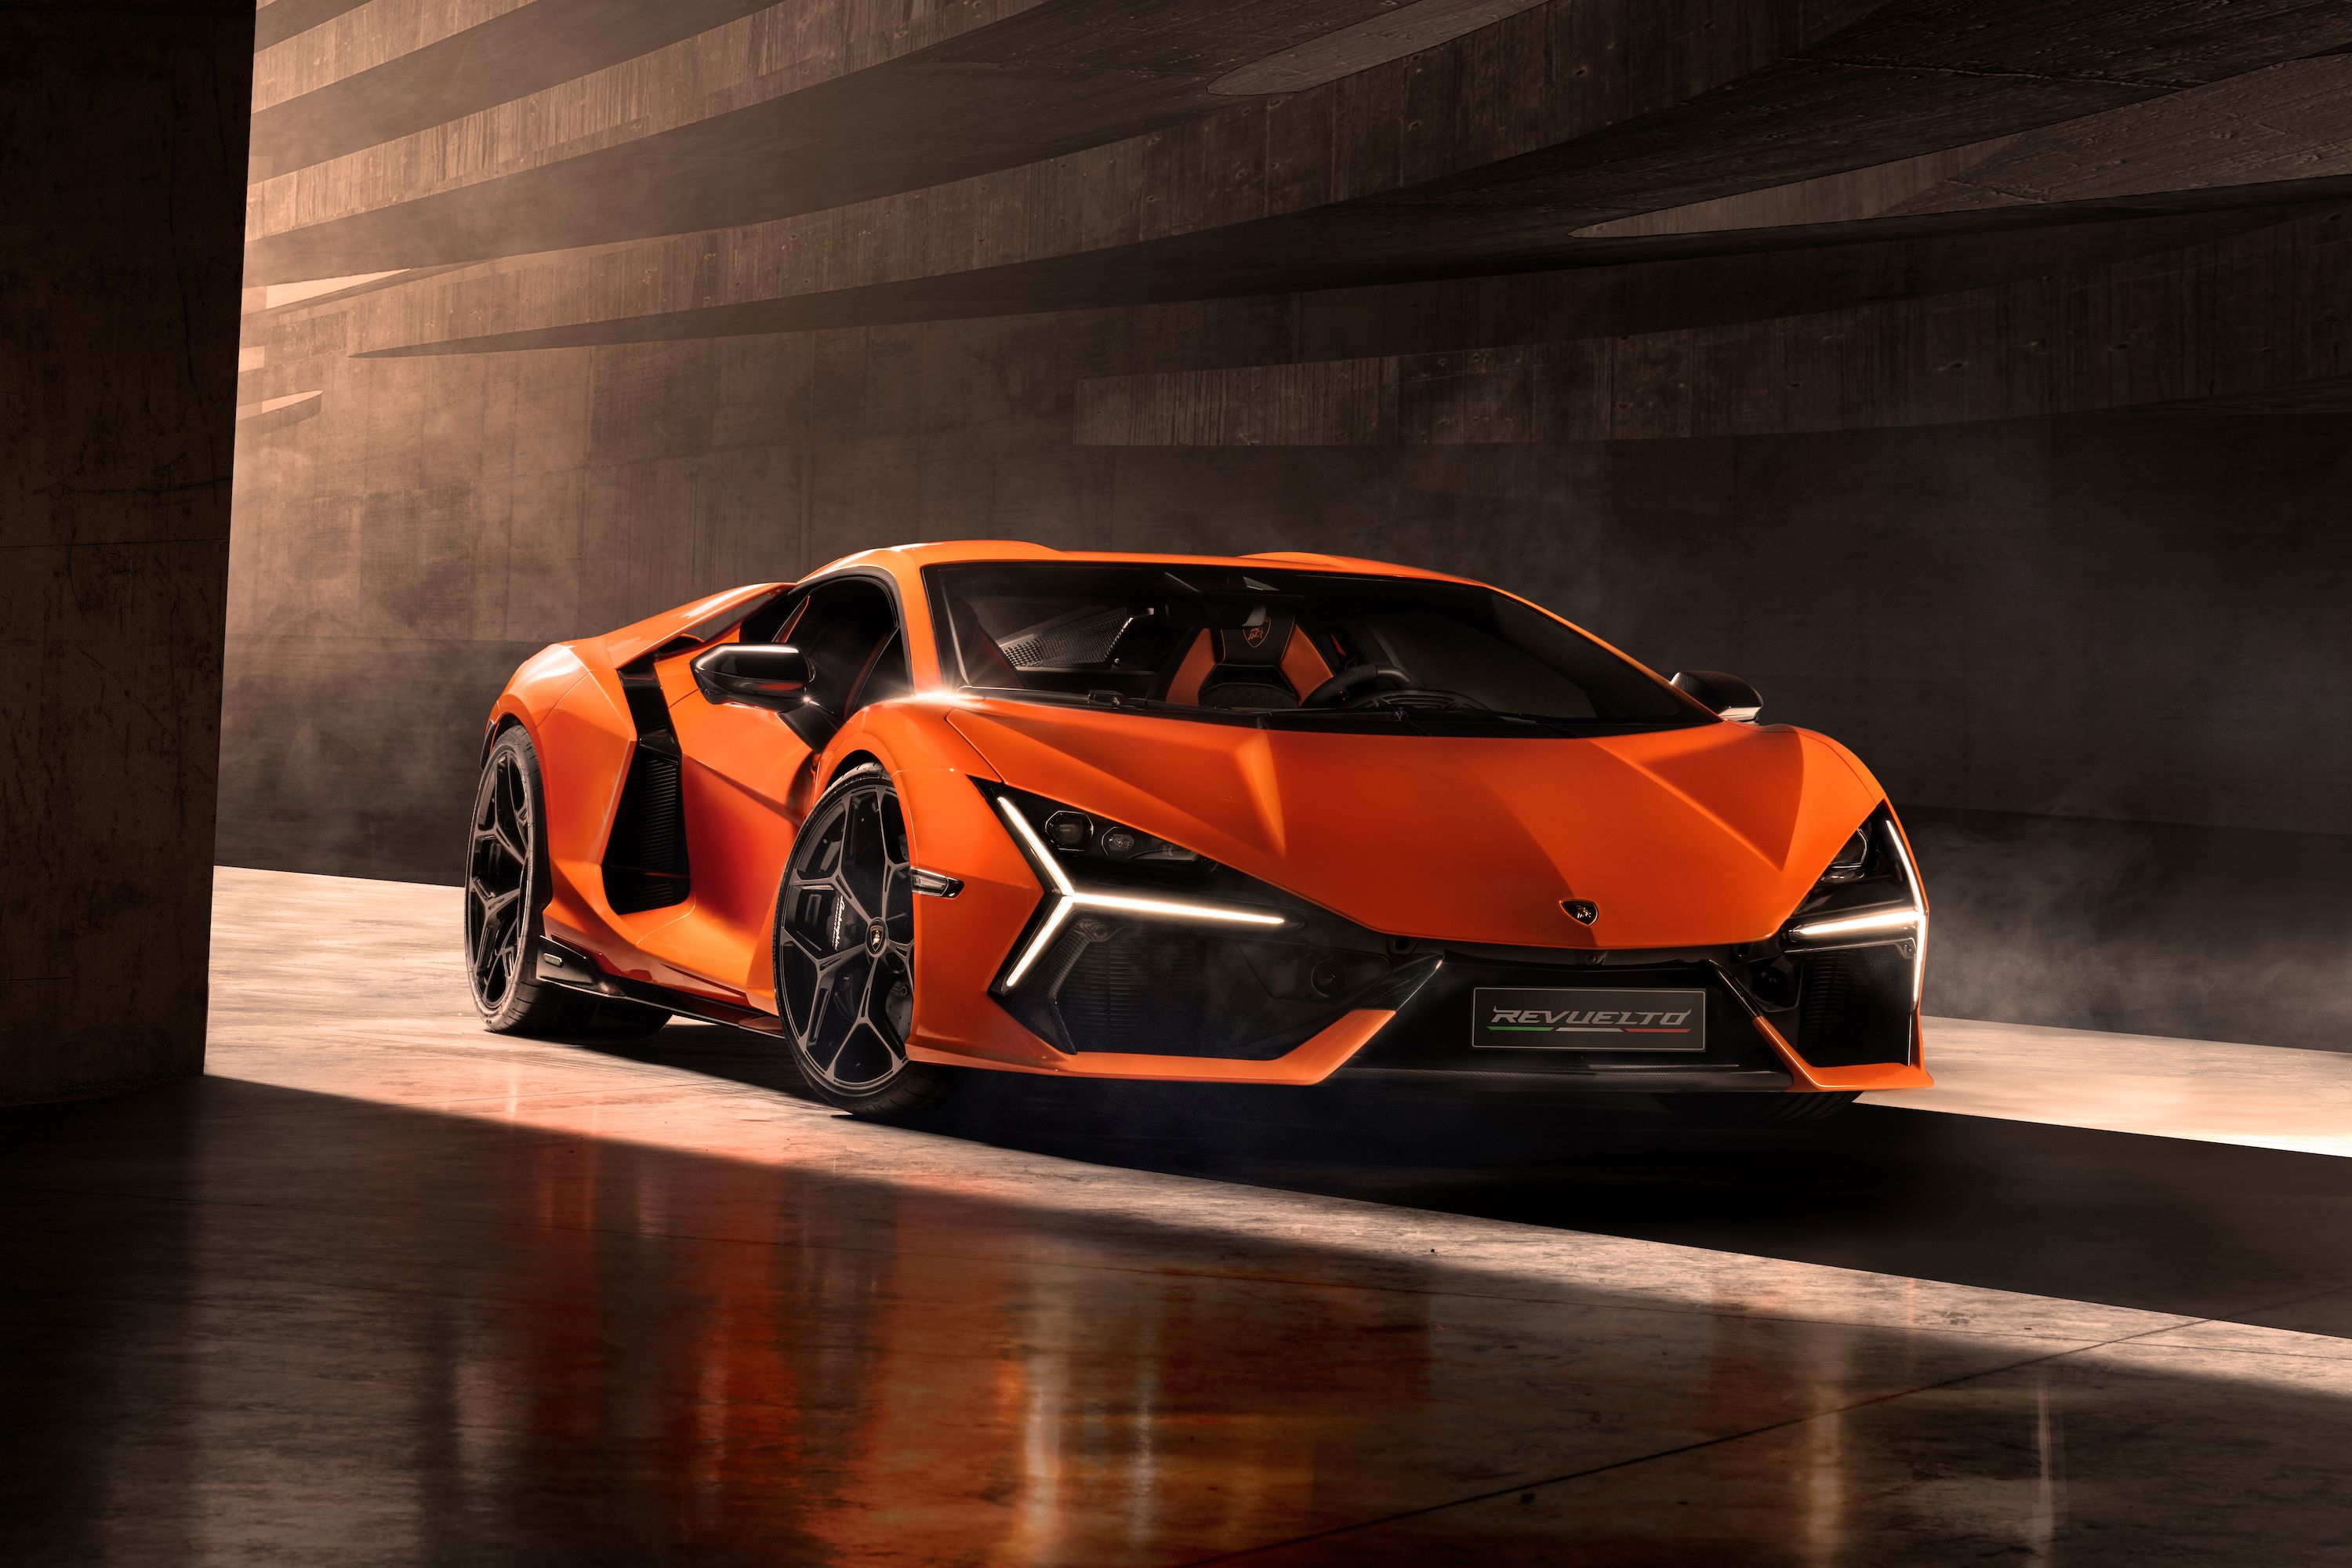 Lamborghini Aventador Price - Images, Colors & Reviews - CarWale